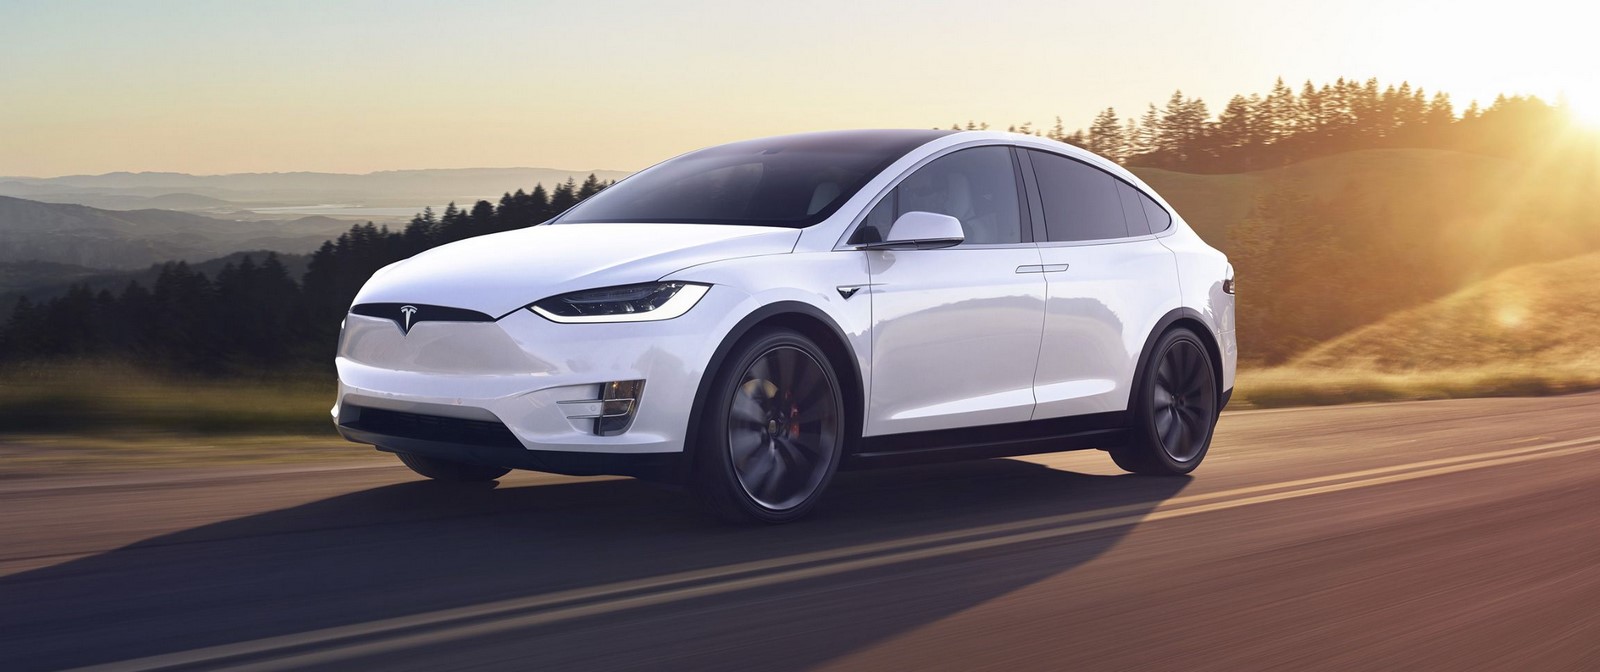 The Unorthodox Design of Tesla - Sheet6